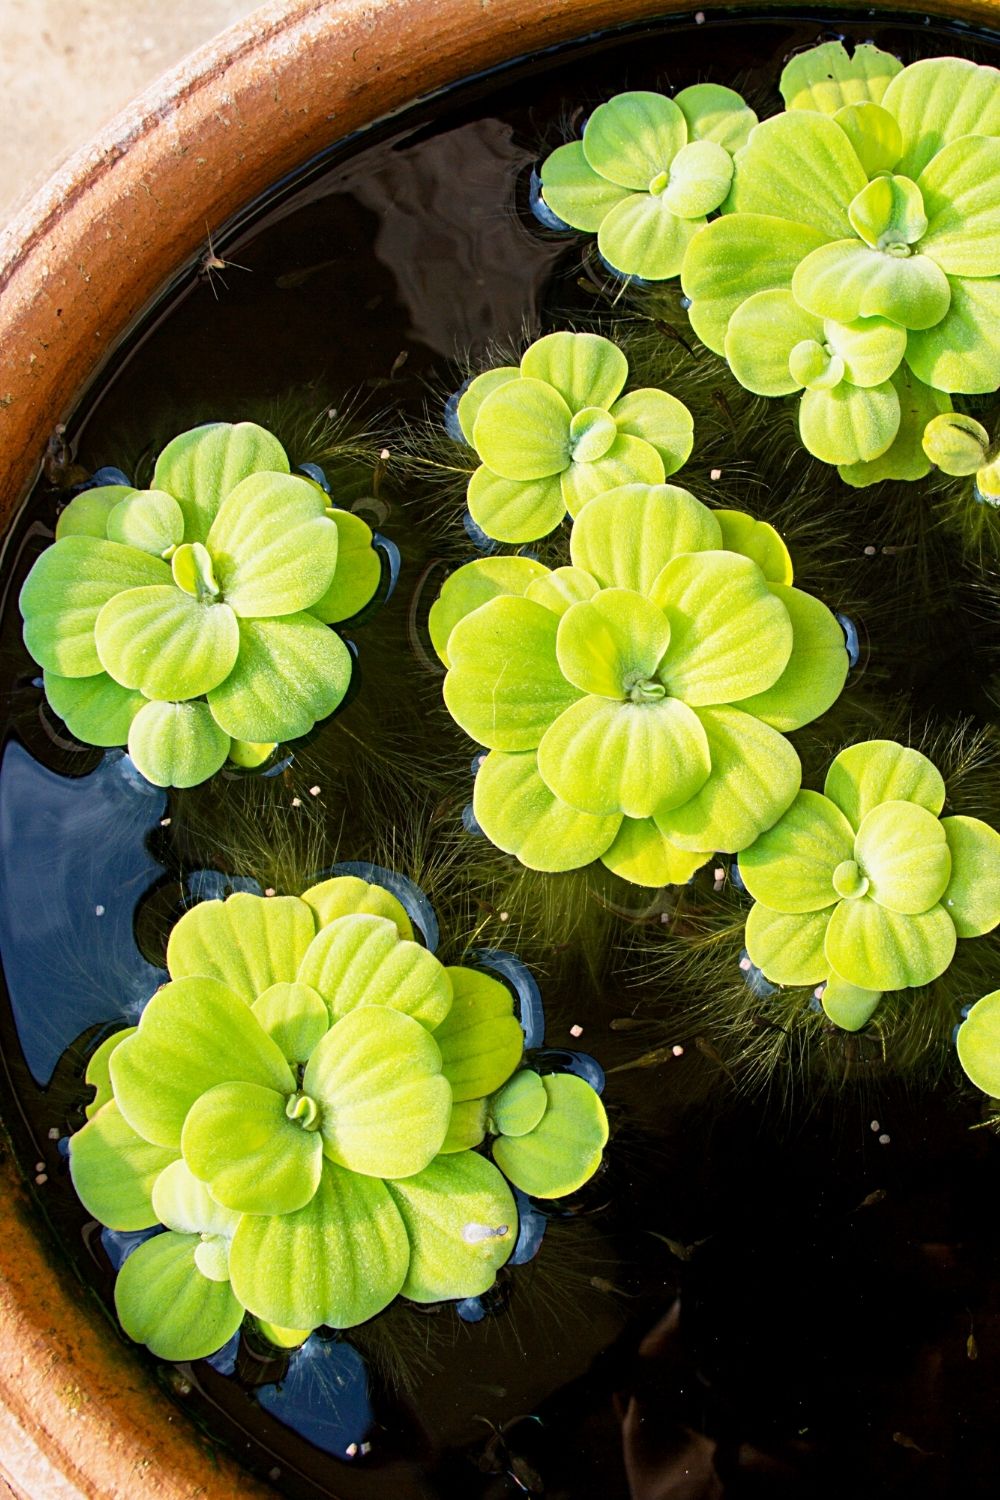 Duckweed helps in lowering the effect of algae in your betta fish's aquarium